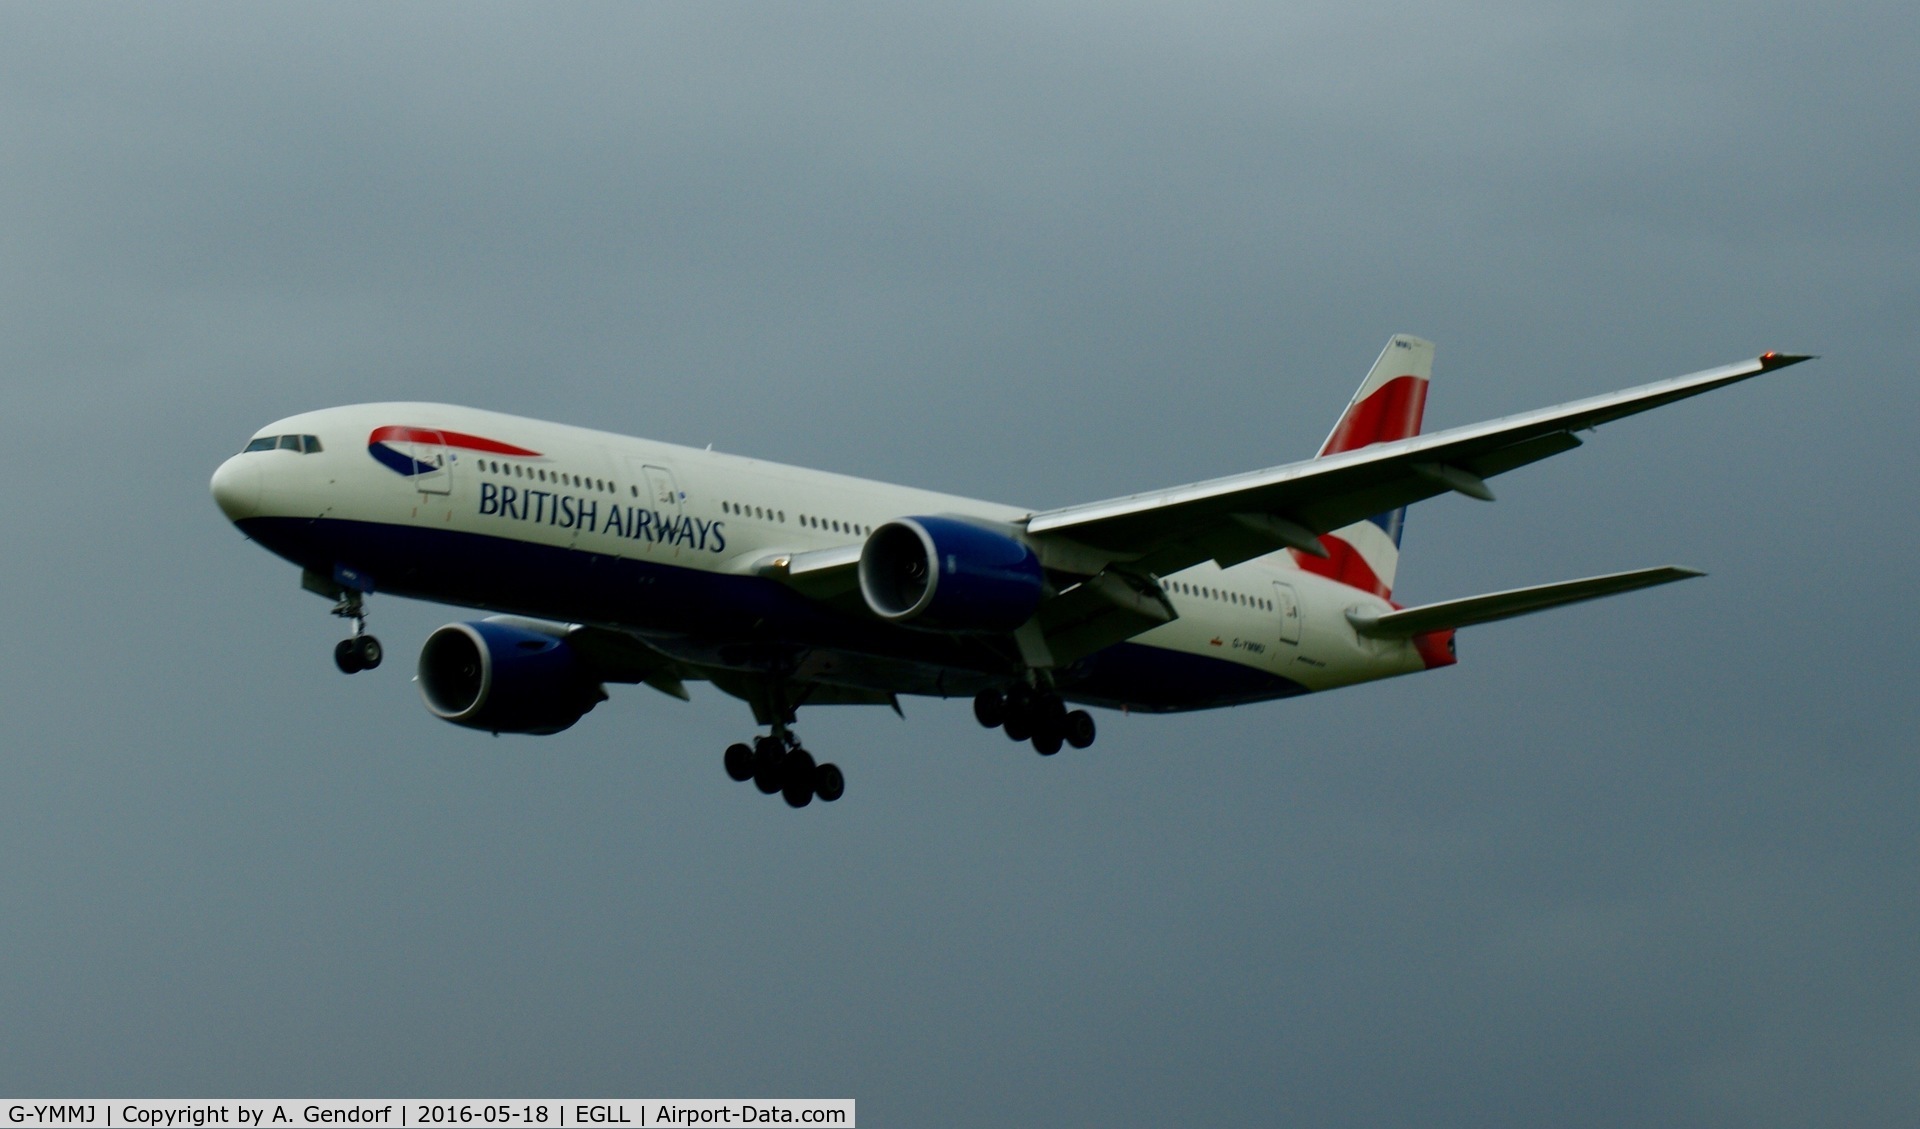 G-YMMJ, 2000 Boeing 777-236 C/N 30311, British Airways, is here on finals RWY 27L at London Heathrow(EGLL)